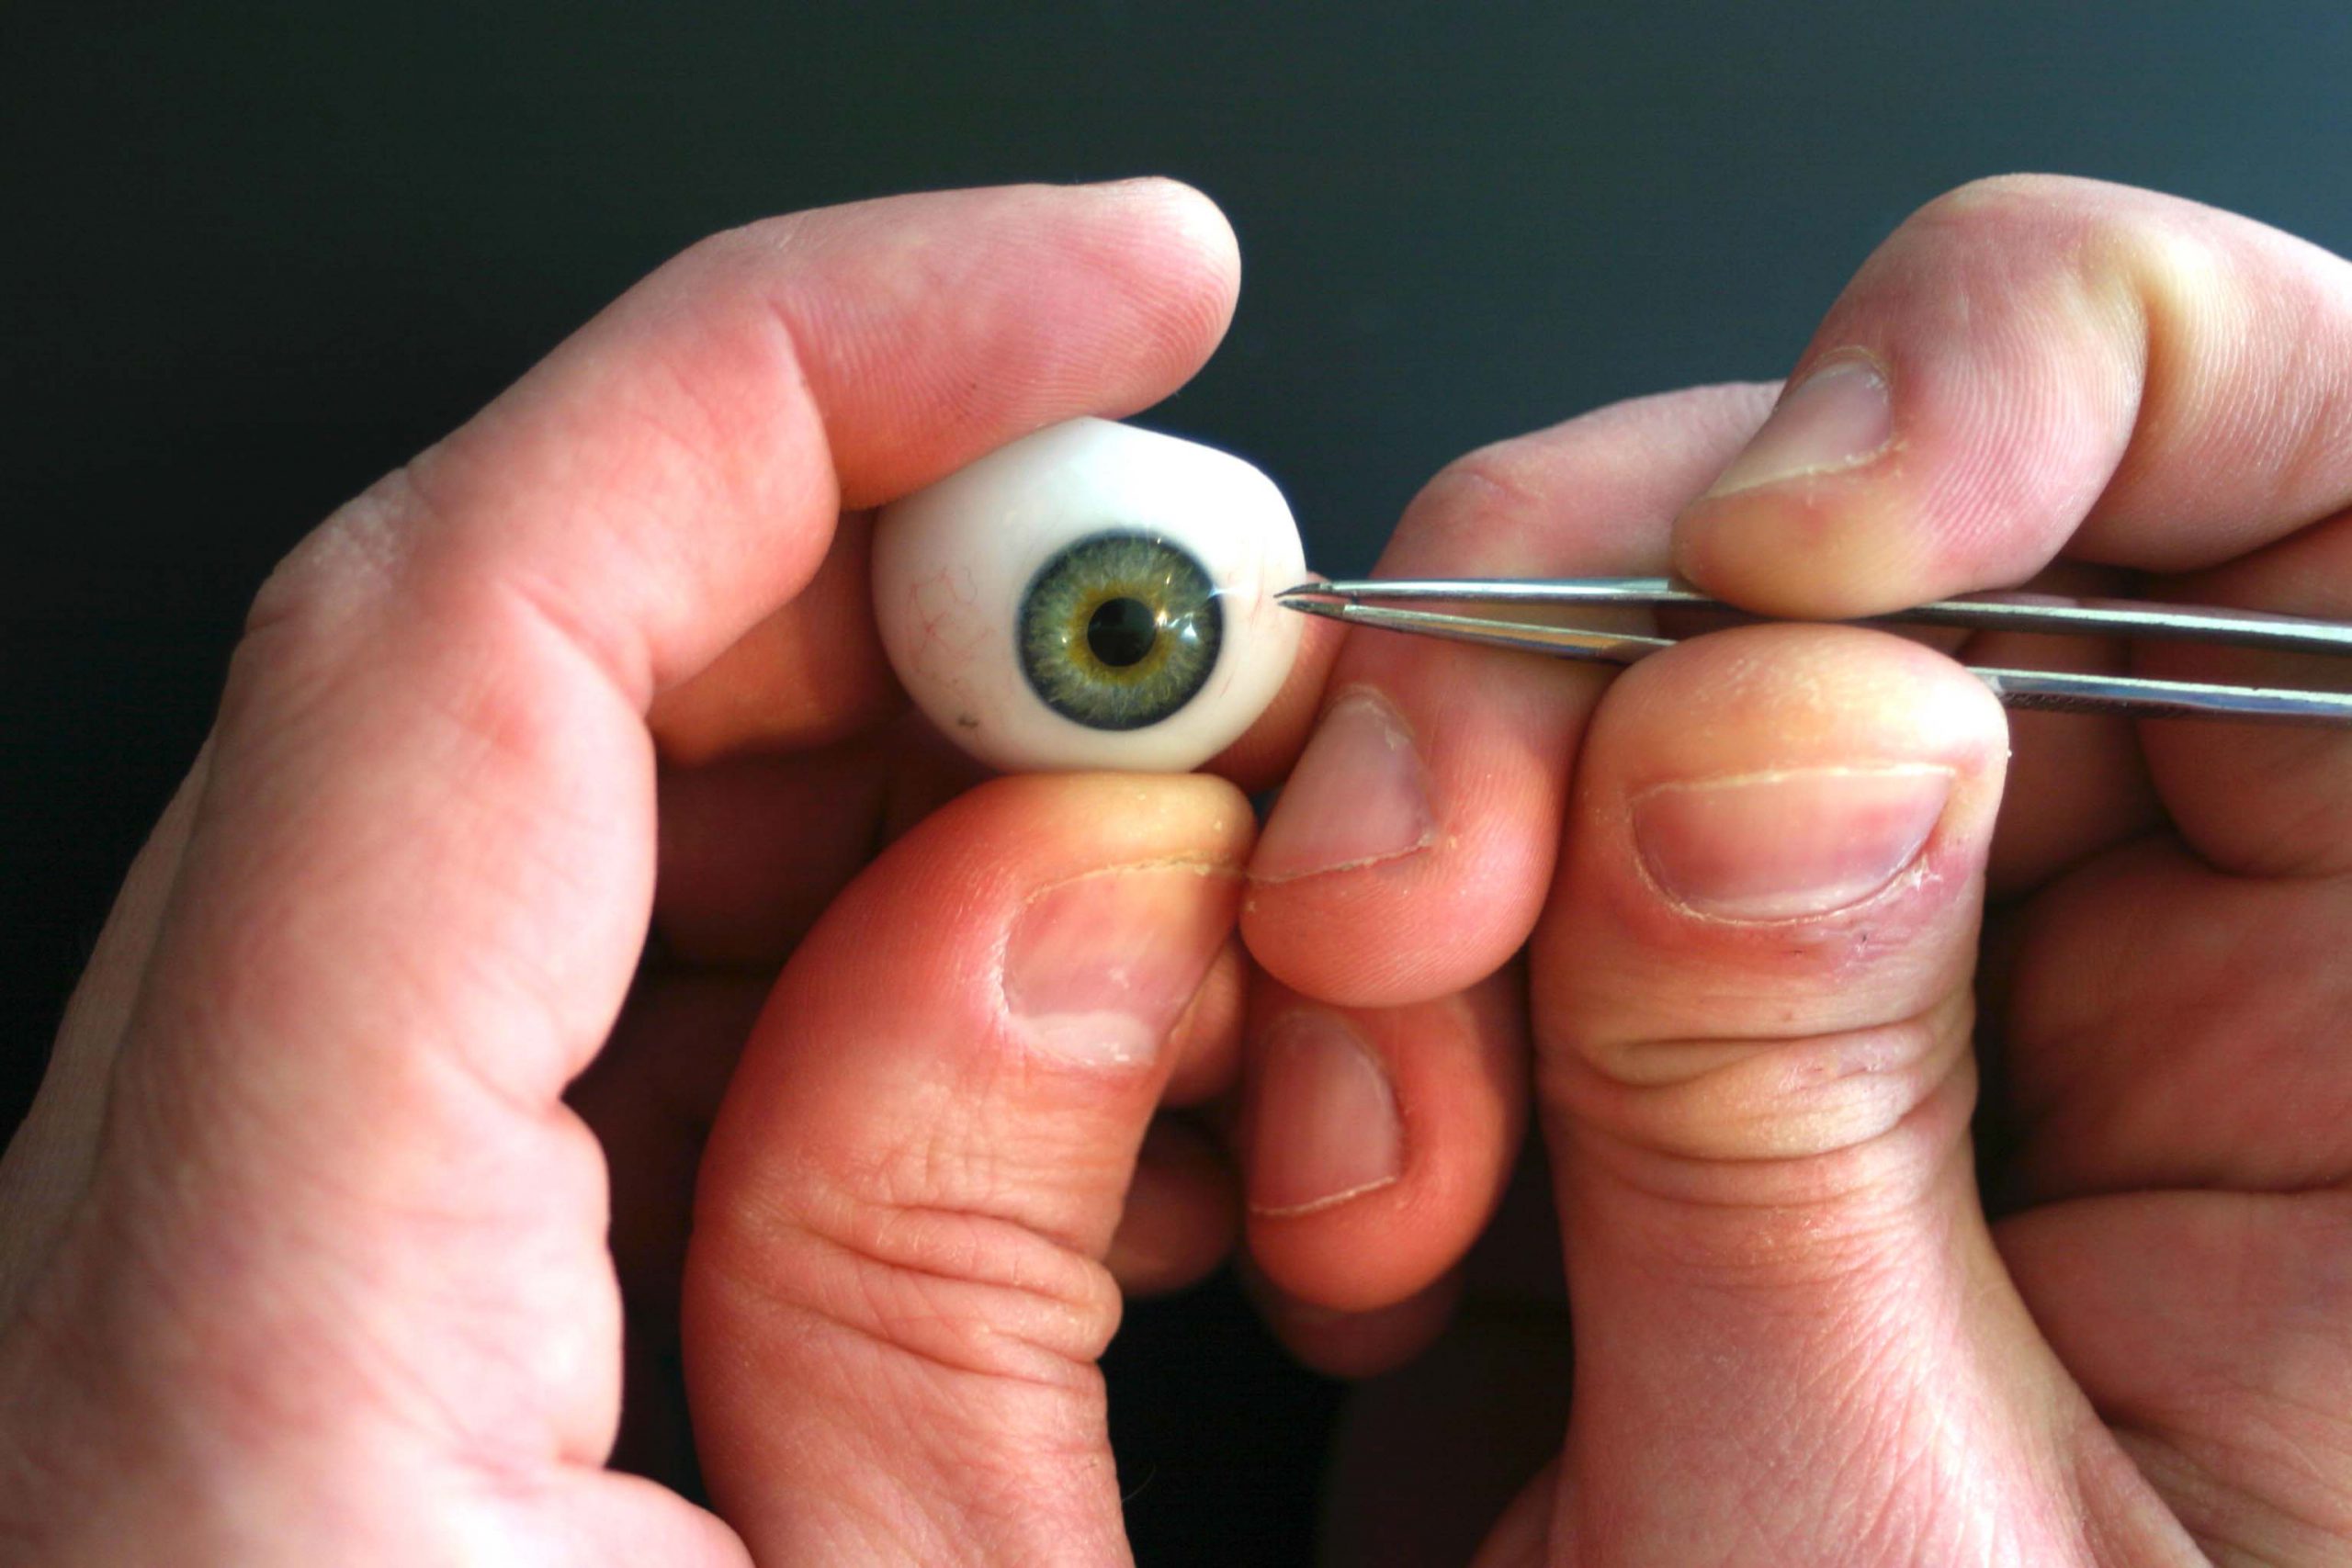 fabrication de prothèse oculaire